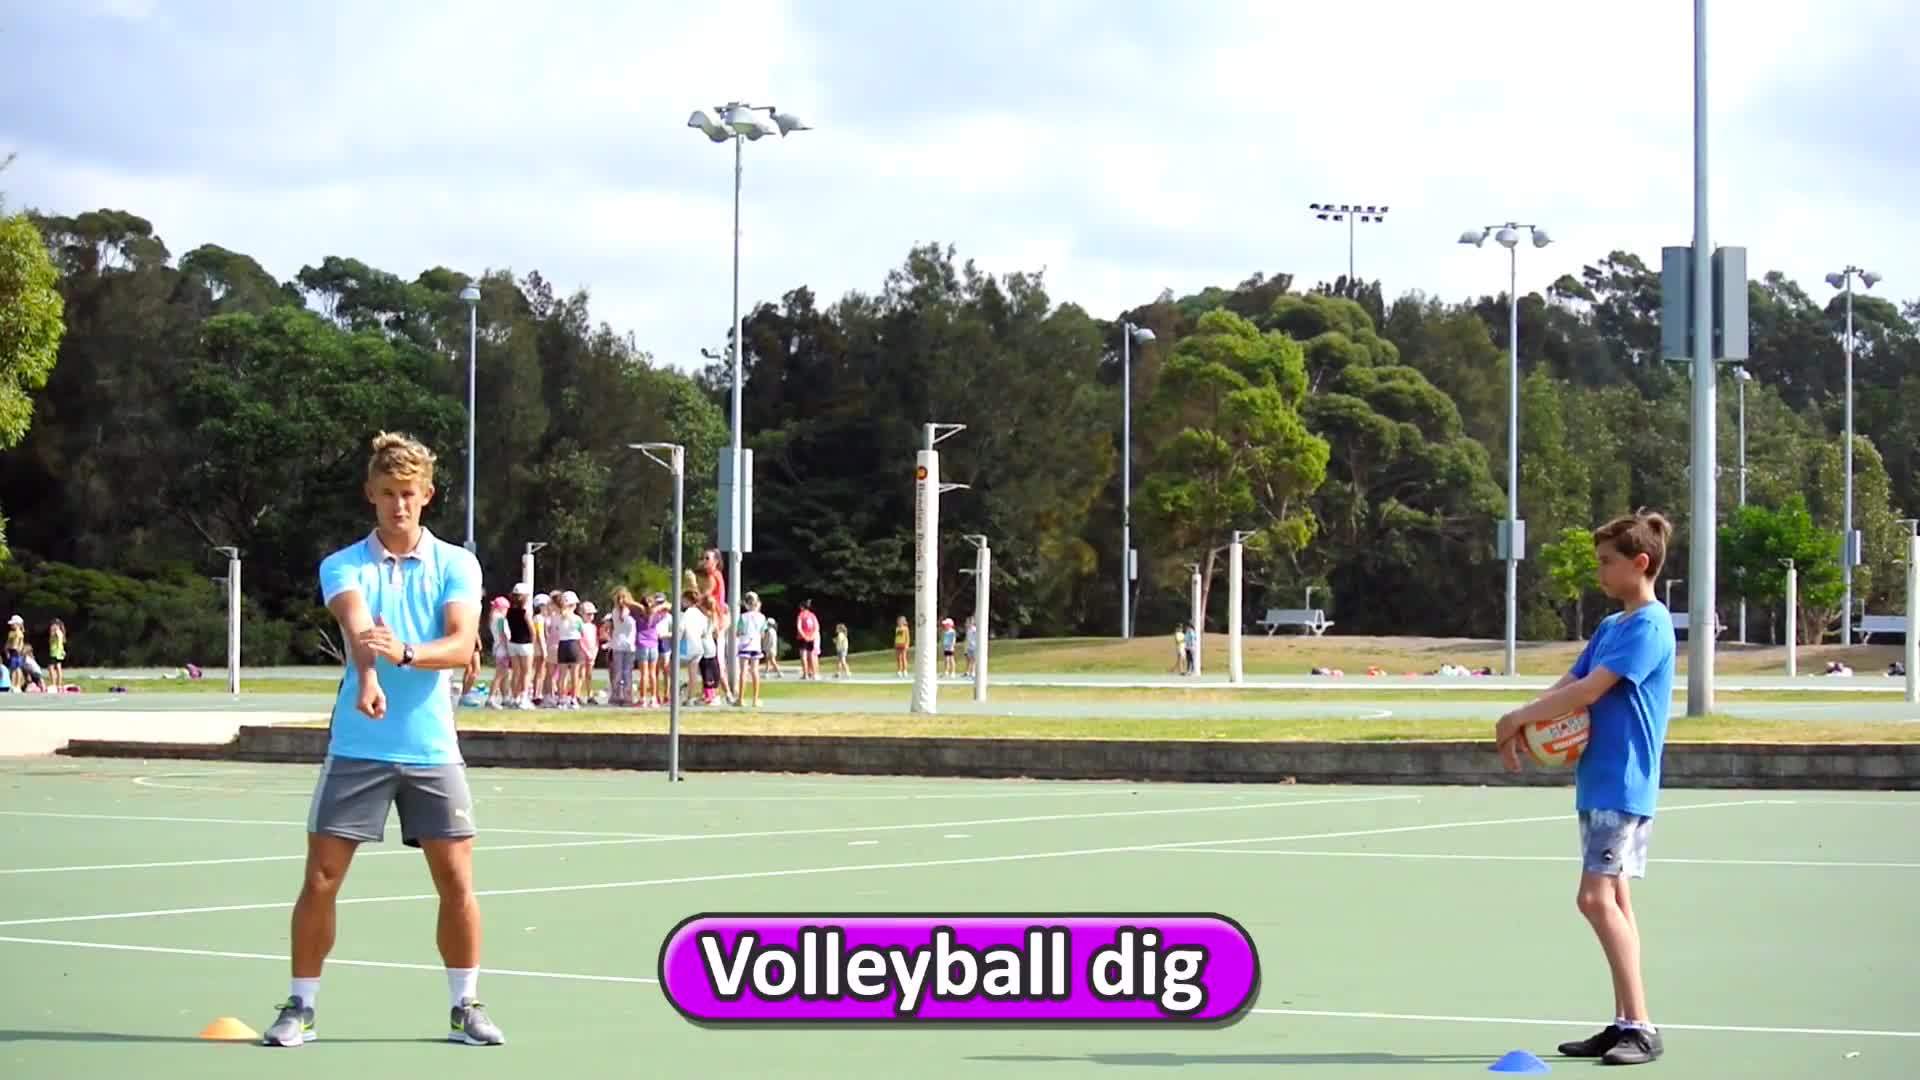 Pairs: Digging/passing (grade 3-6) | Teach Volleyball Skills